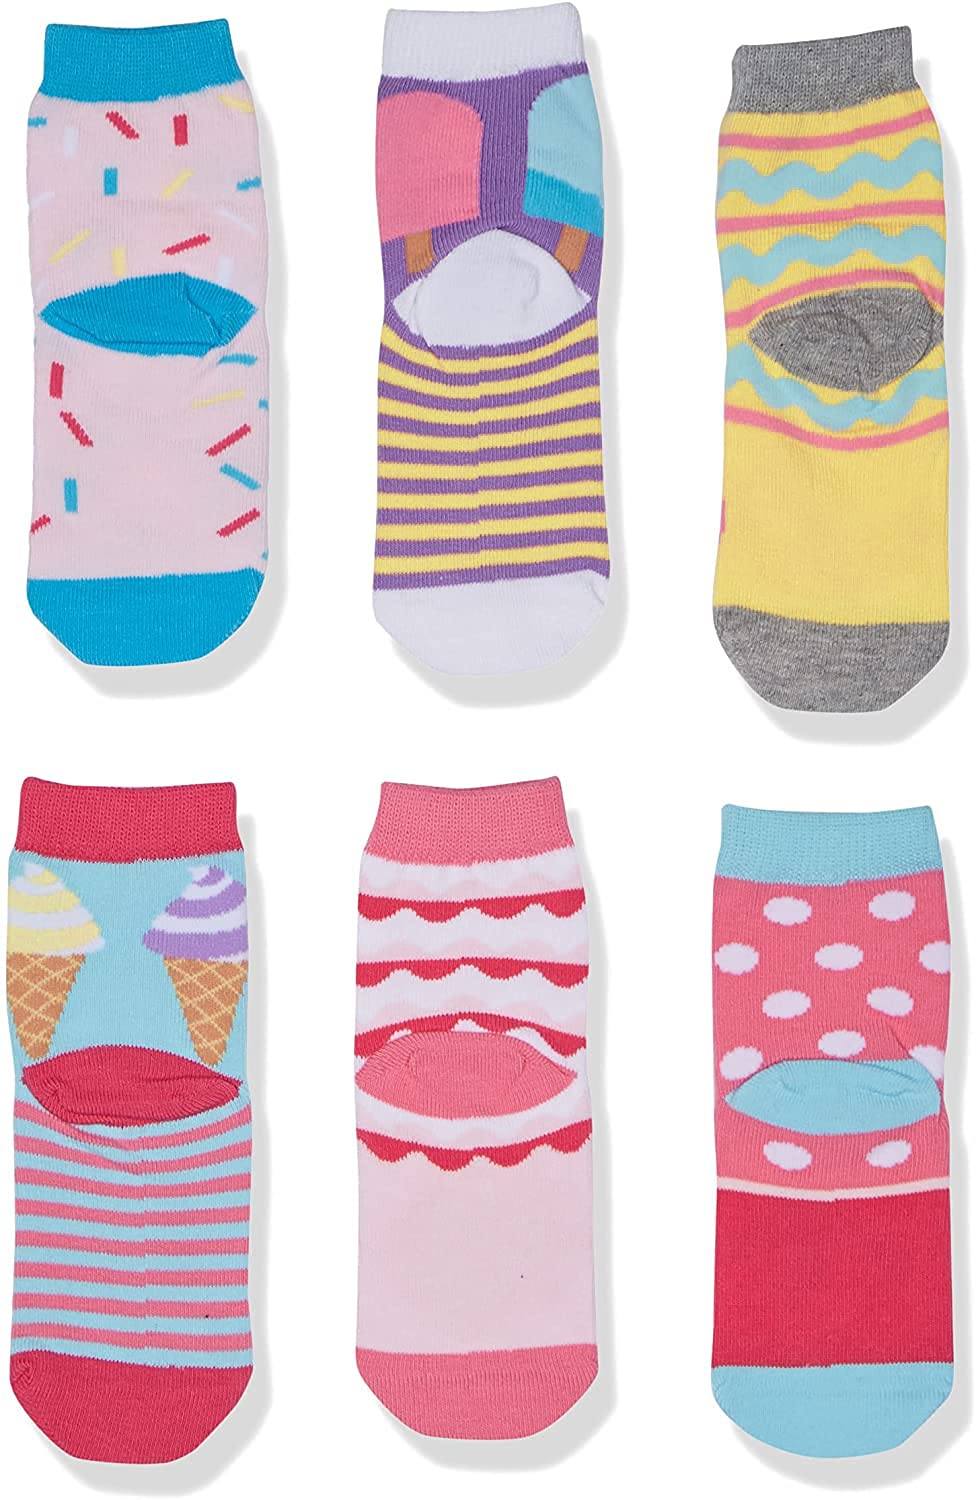 Jefferies Socks girls Sweat Treats Ice Cream/Donuts Fashion Crew Socks 6 Pair Pack